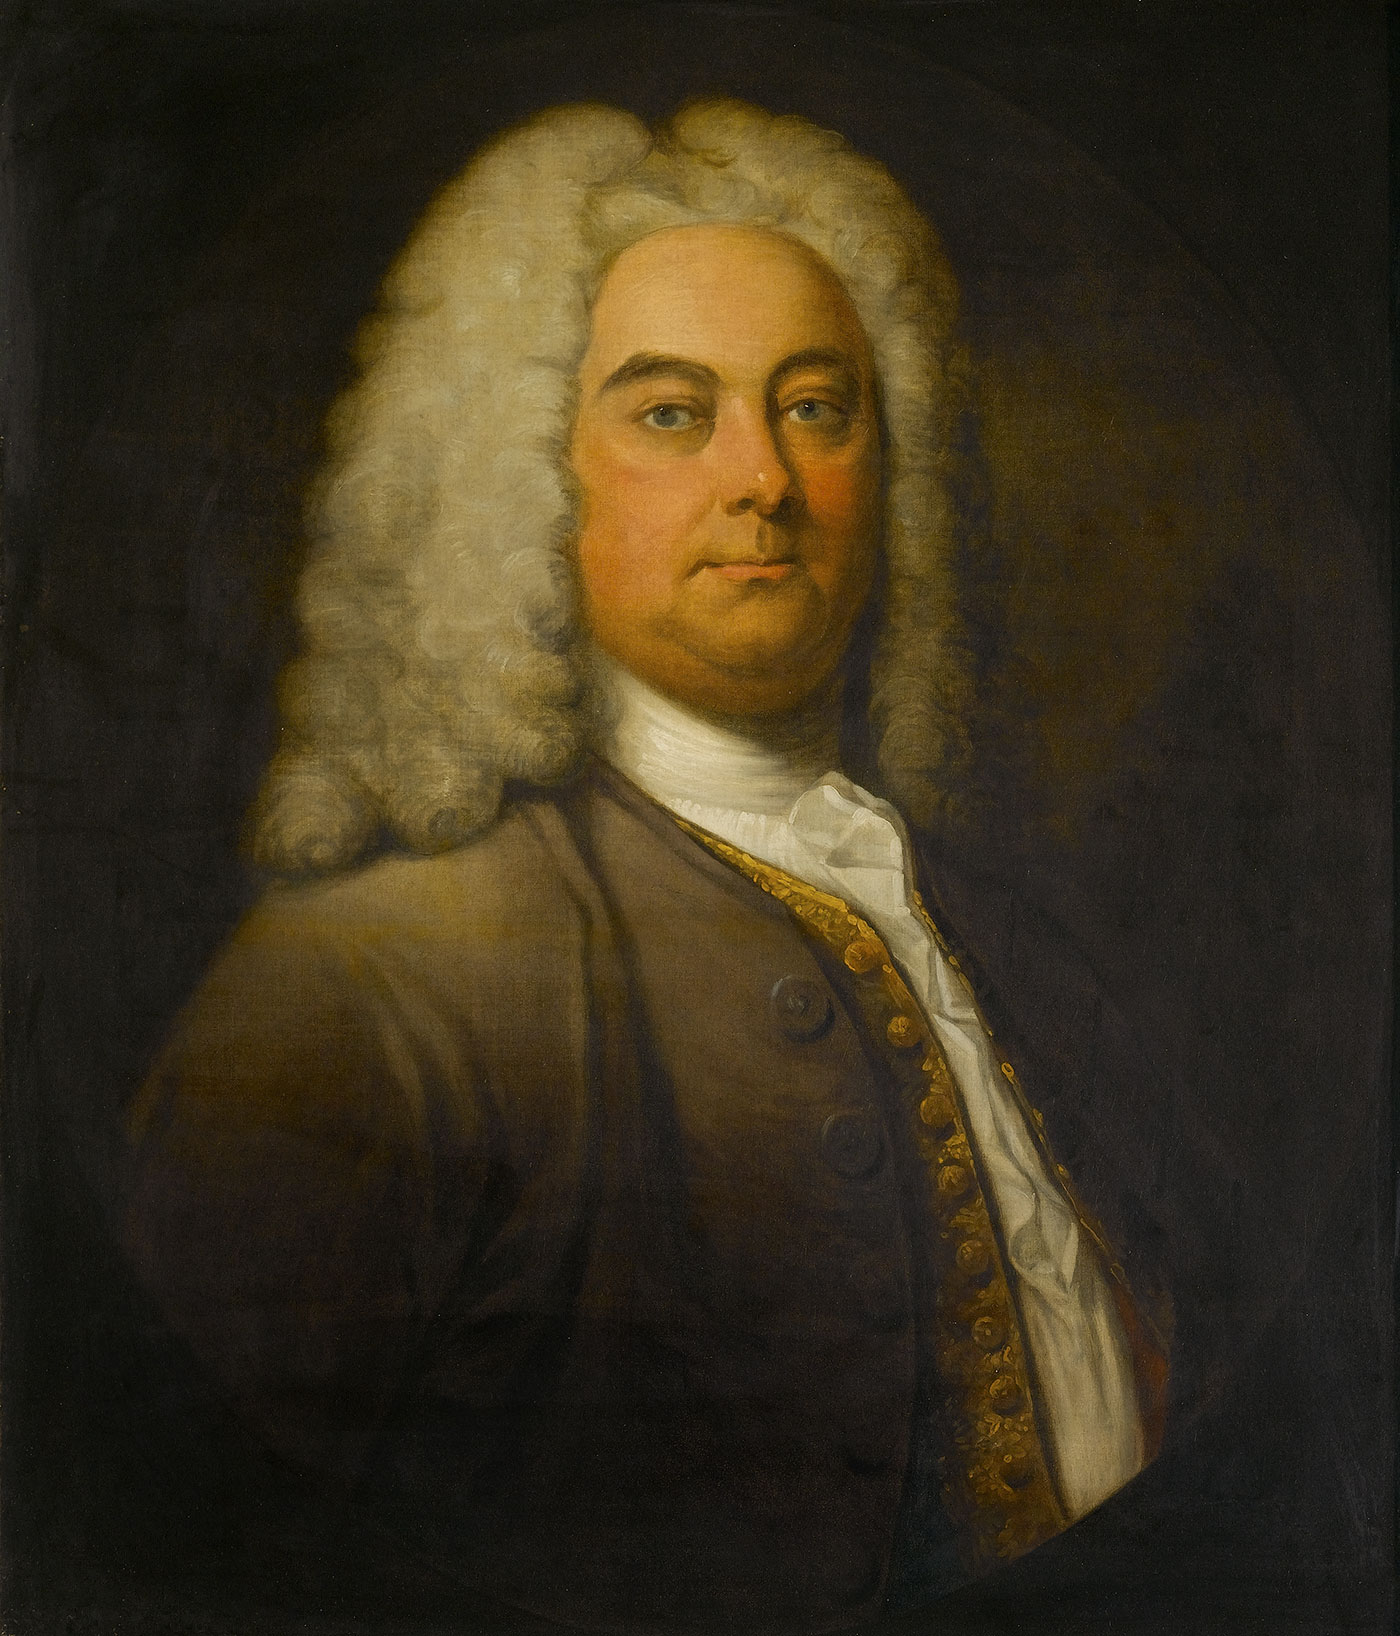 Half-length portrait from the circle of William Hogarth (1697-1764): mid eighteenth century.